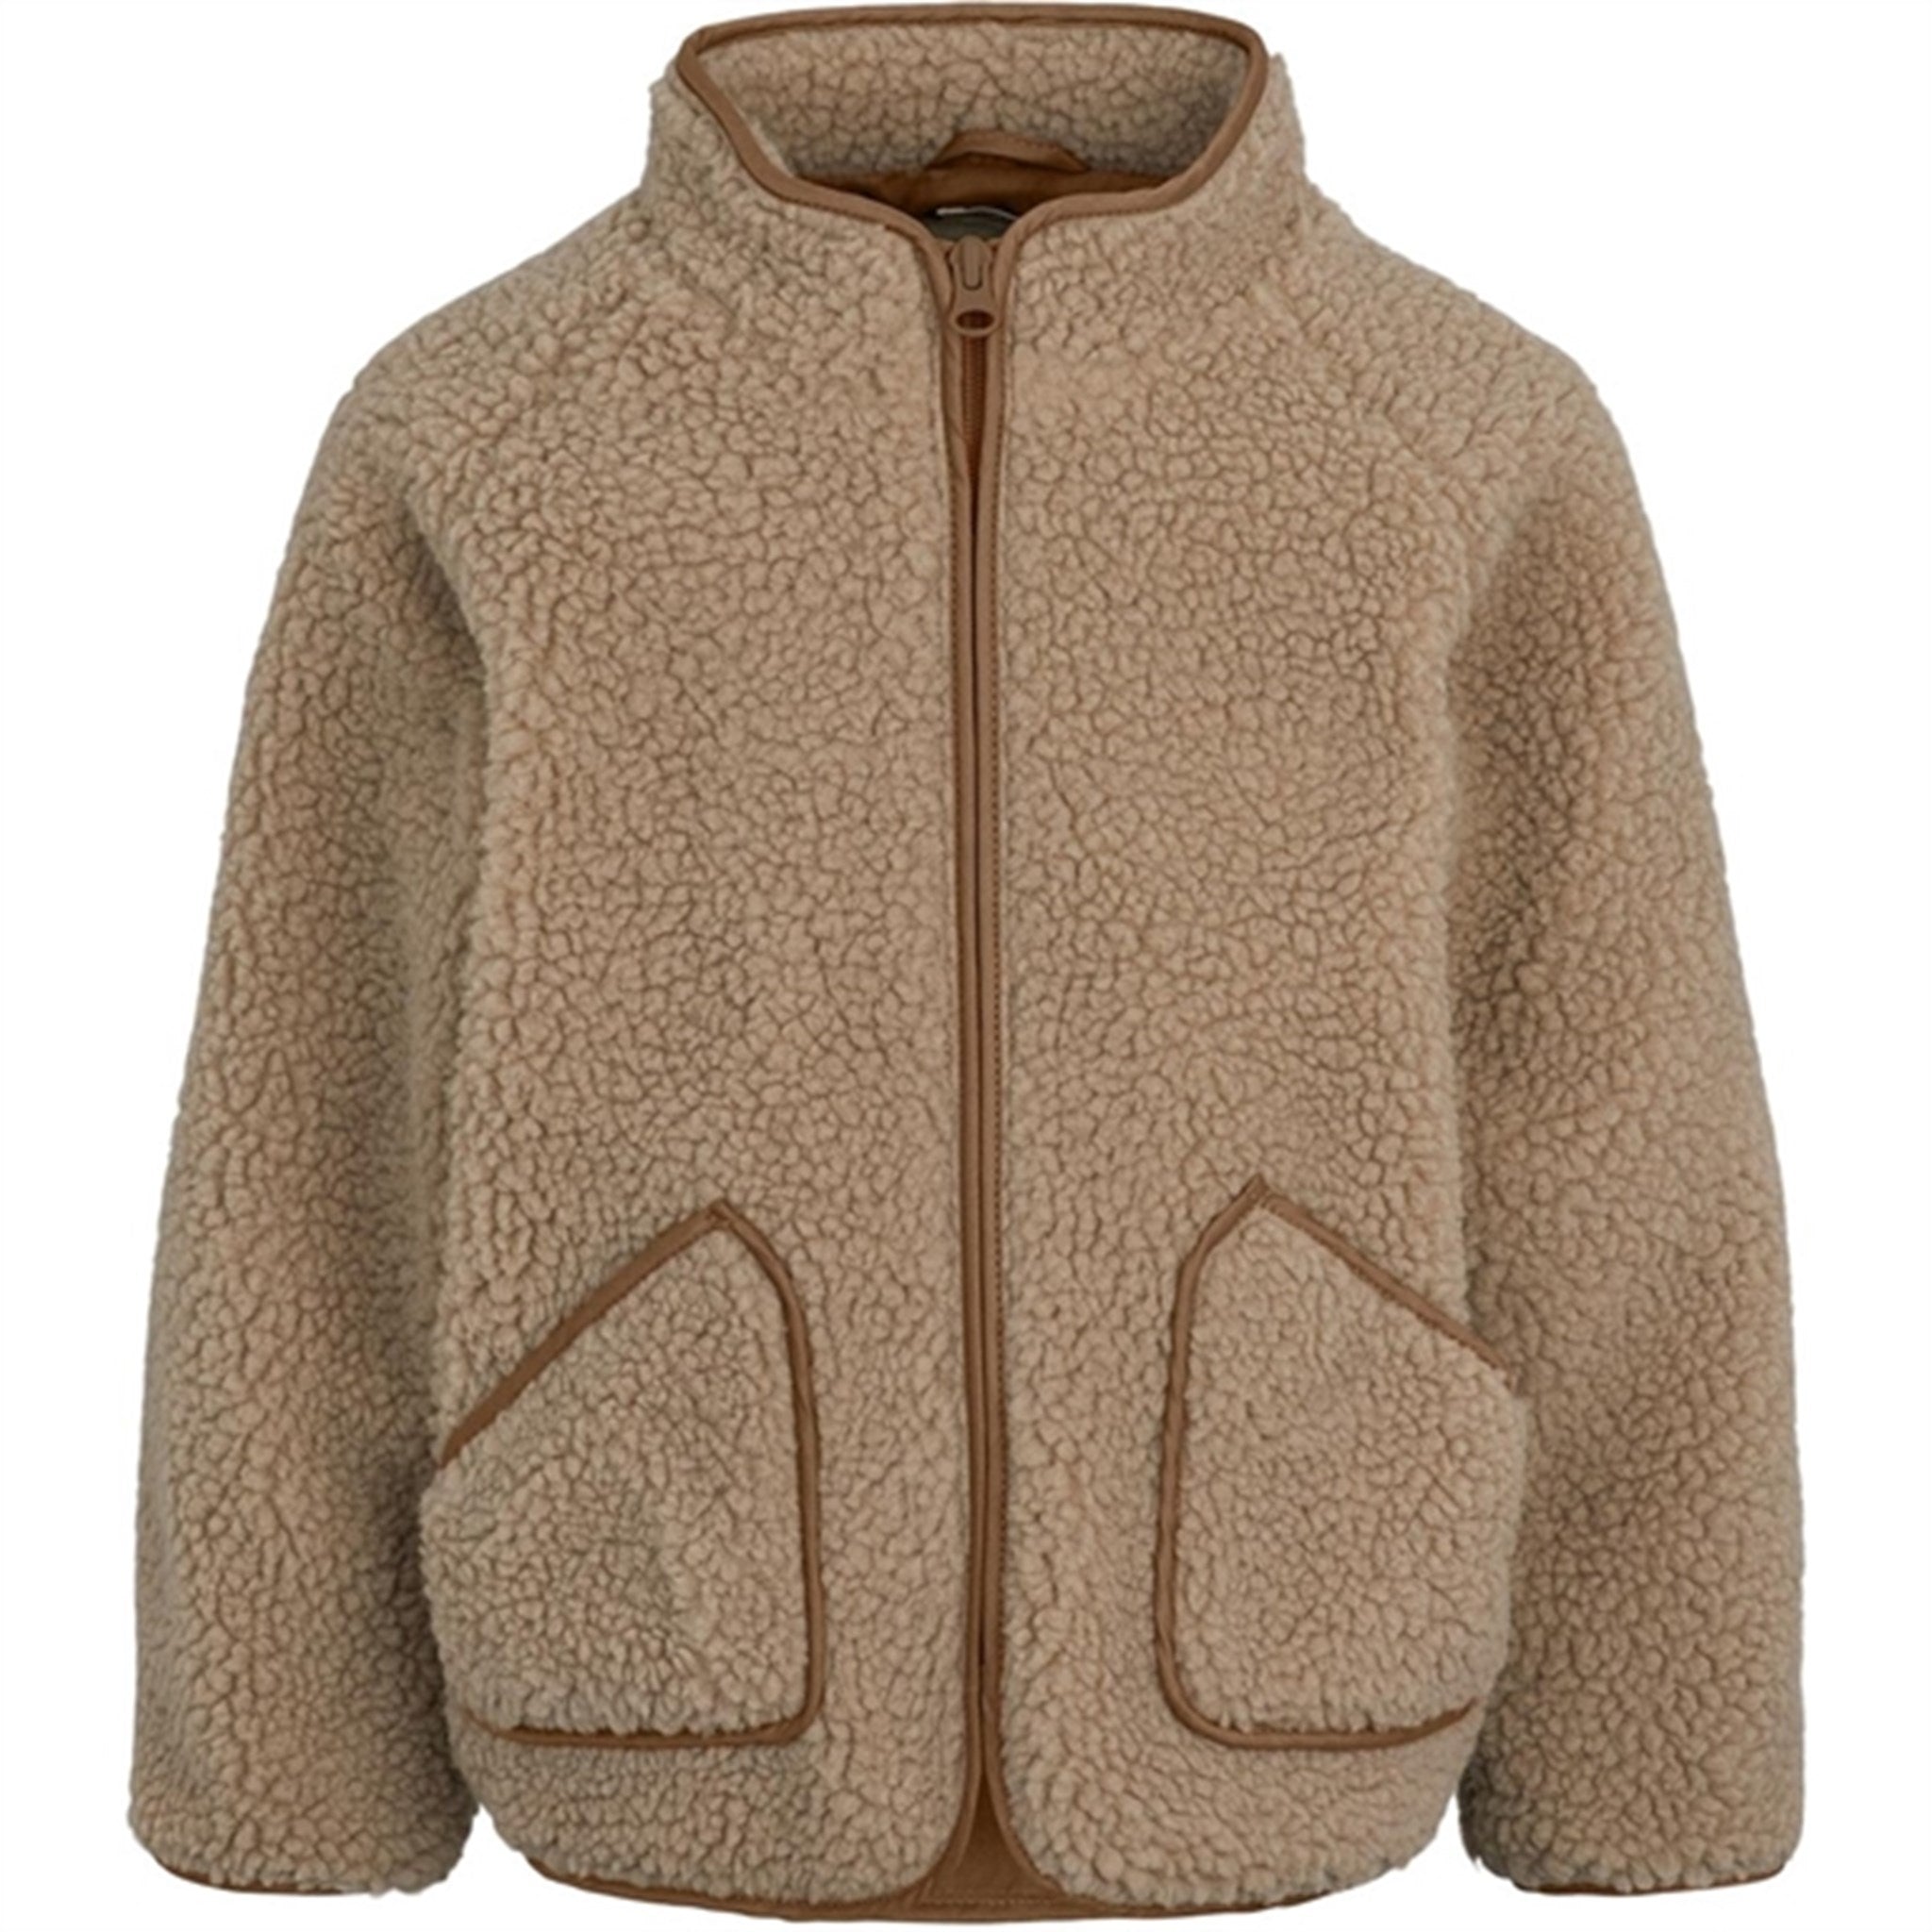 MarMar Jerry Teddybear Fleece Jacket Sandstone